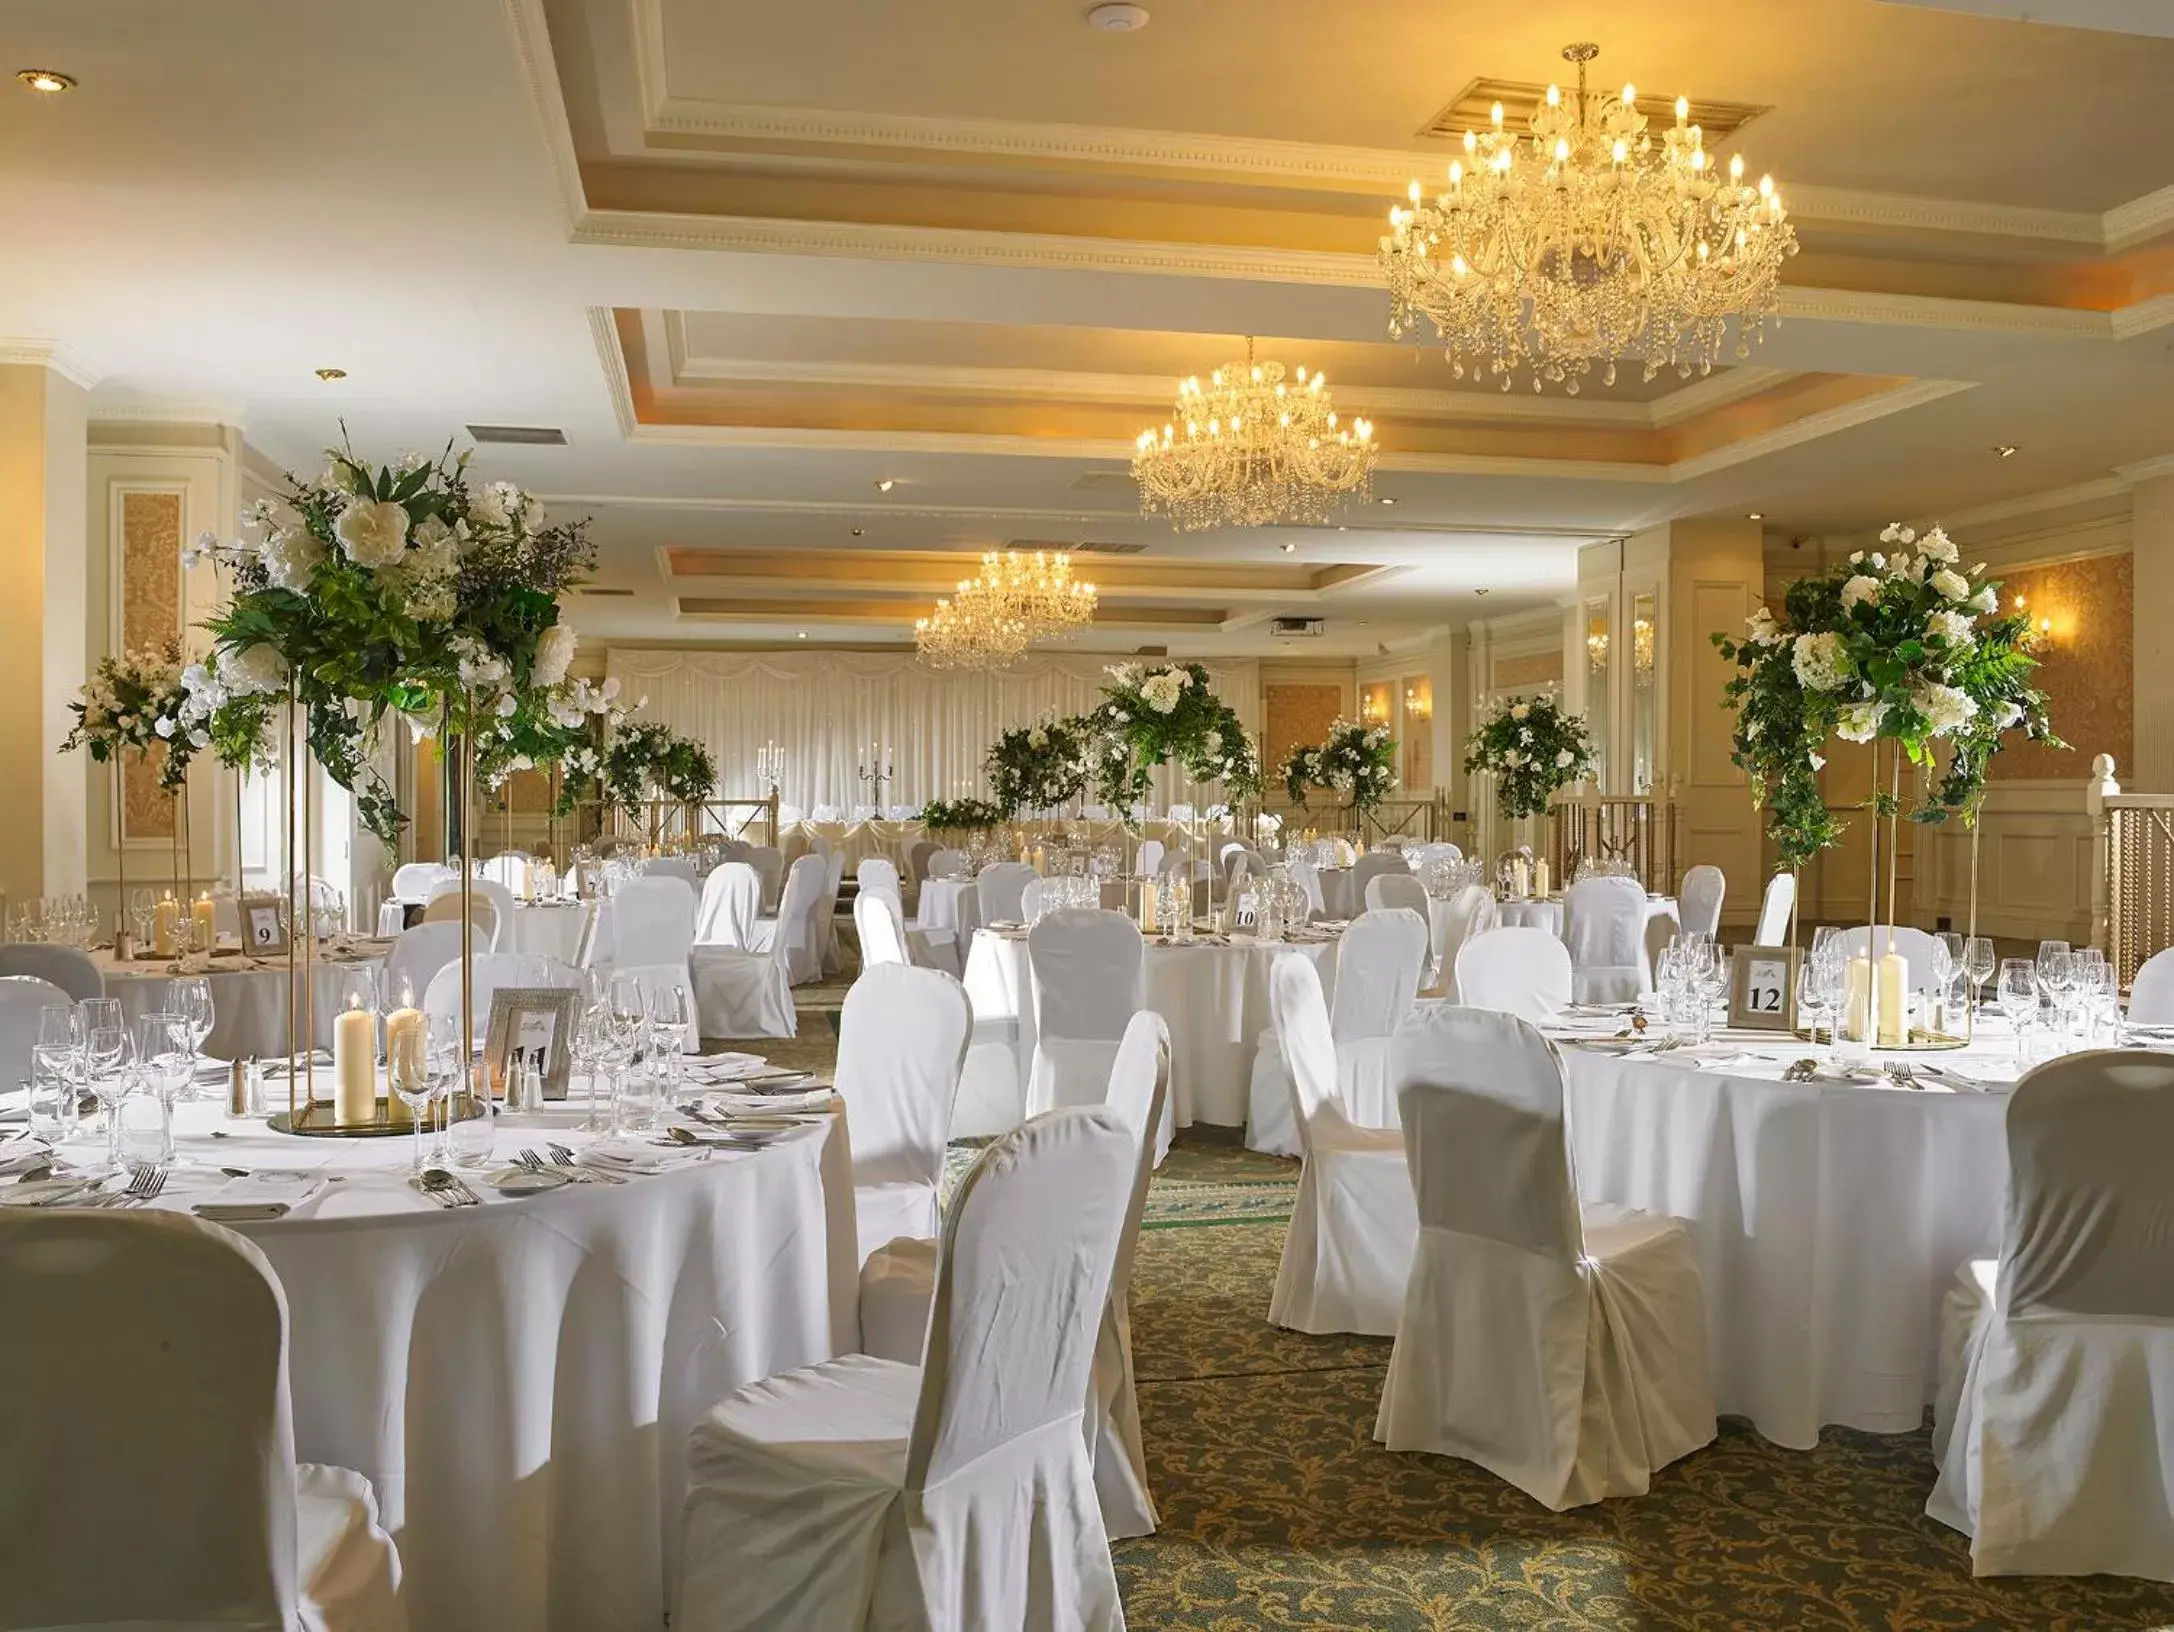 Banquet/Function facilities, Banquet Facilities in The Park Hotel Dungarvan